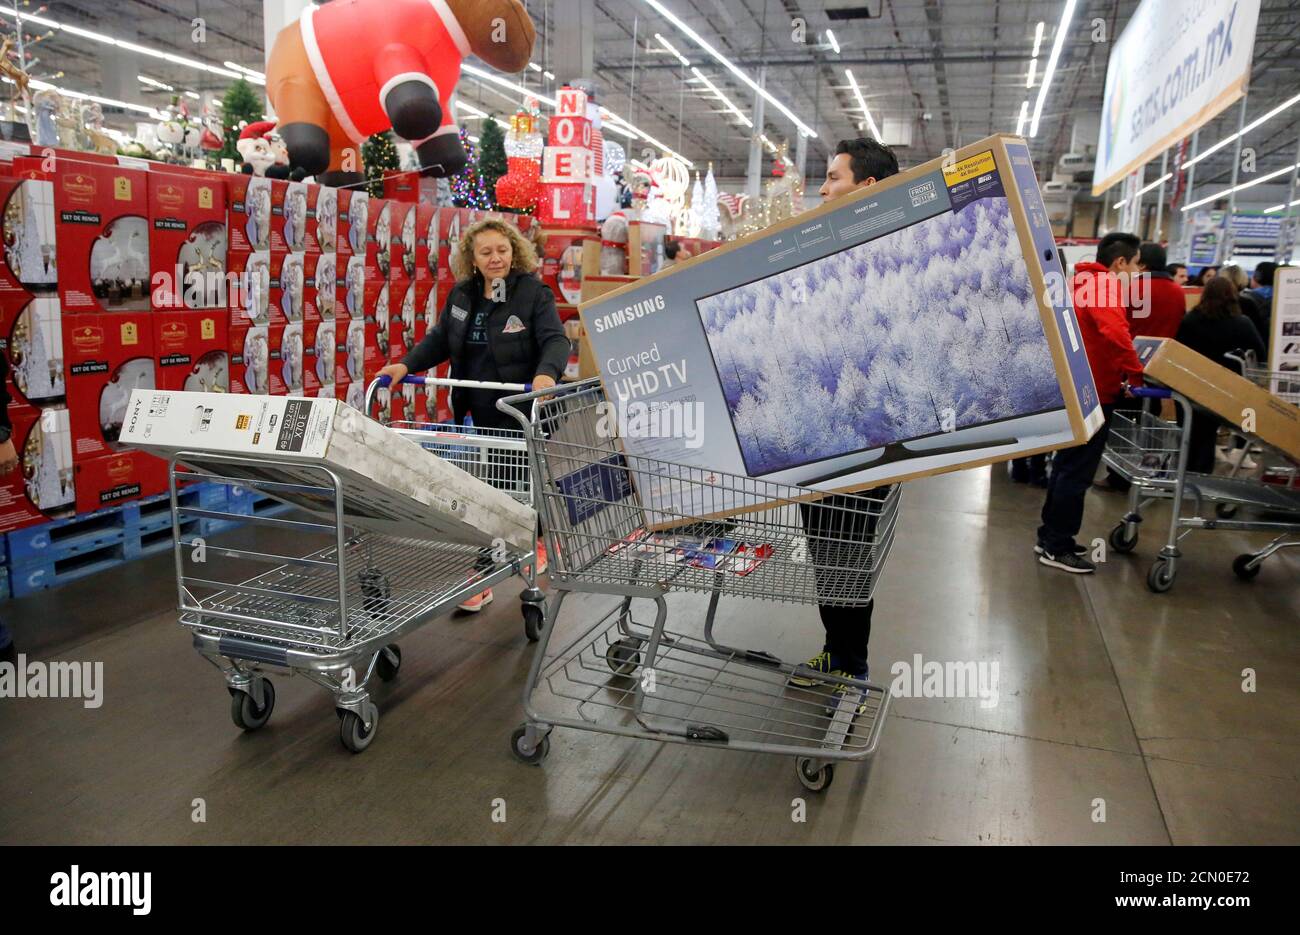 Sams club shopping cart sams hi-res stock photography and images - Alamy